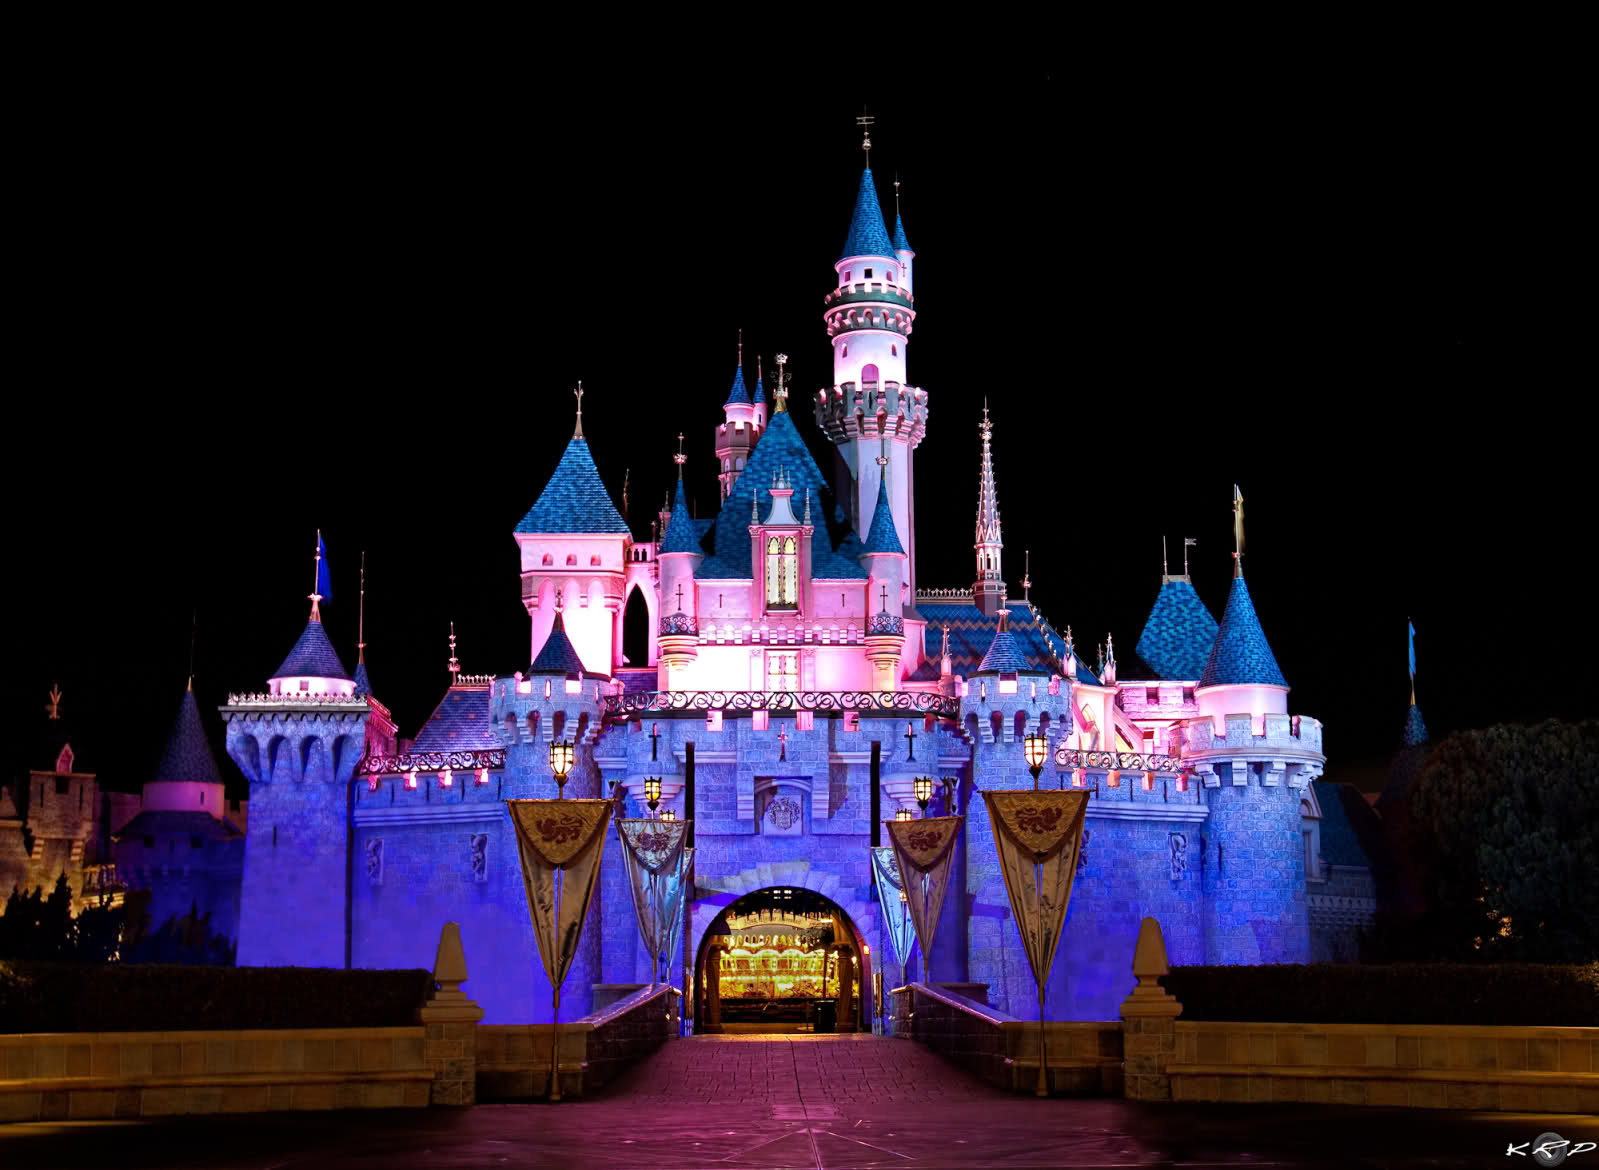 Orignal image of the castle in Disneyland California Bright colours